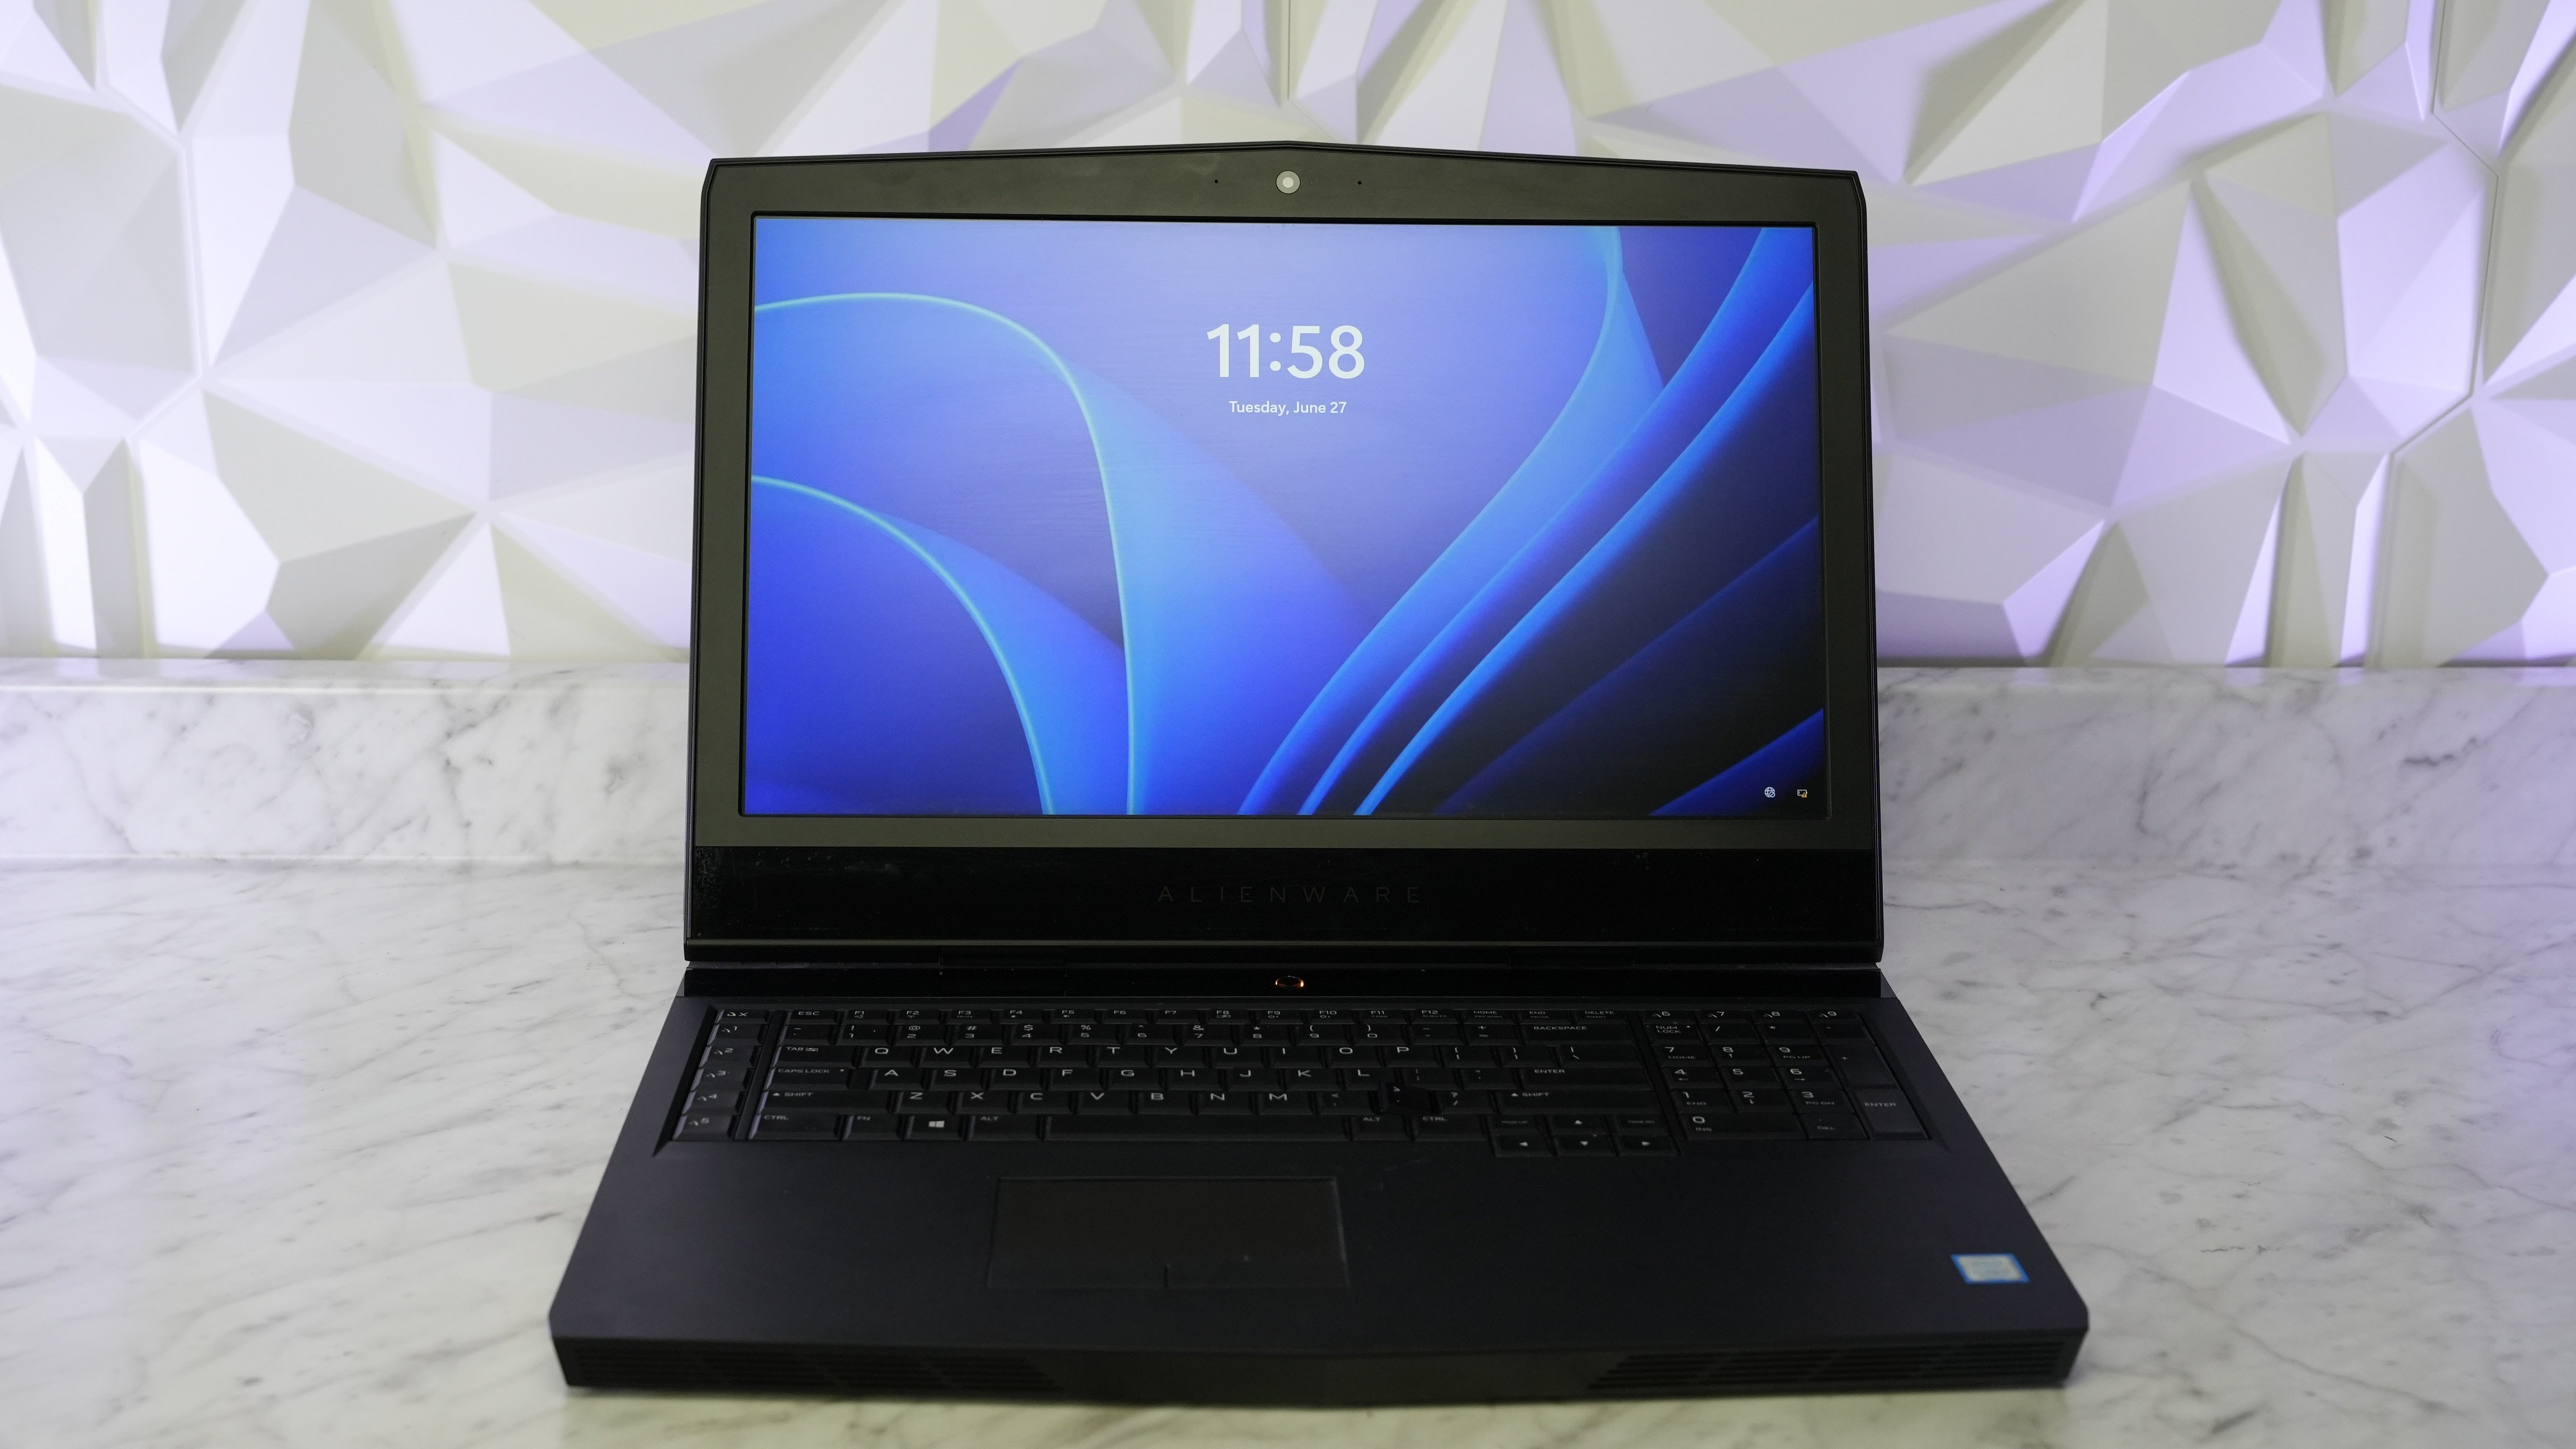 Alienware R4 17- Intel i7 8750H + GTX 1070 Gaming Laptop (In Stock)